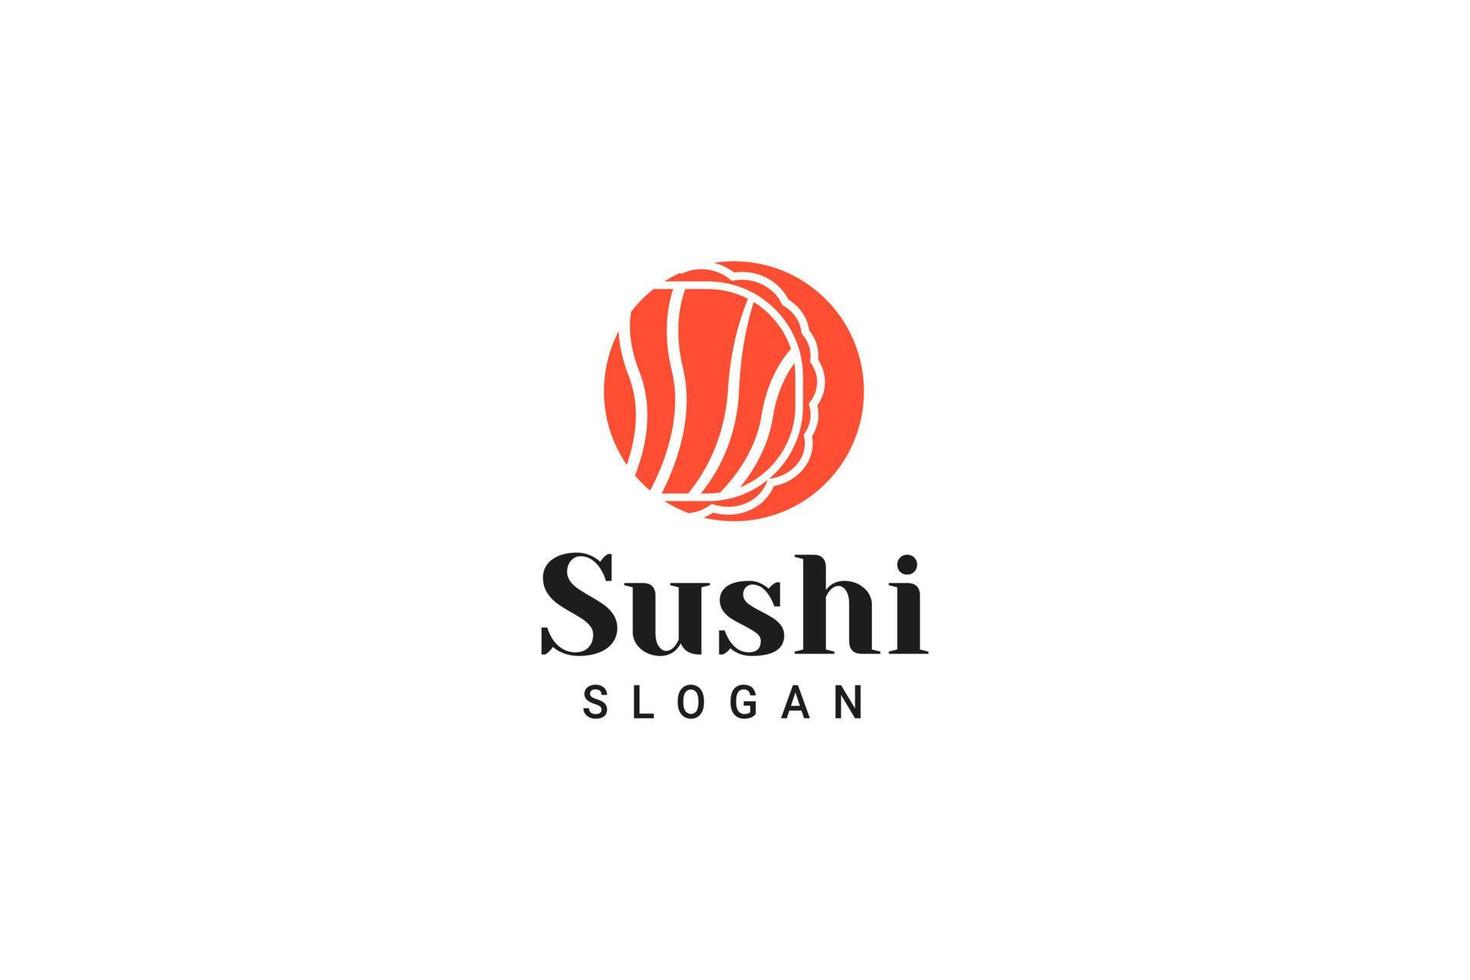 Sushi Logo Japanese Food Restaurant Design Inspiration Template vector